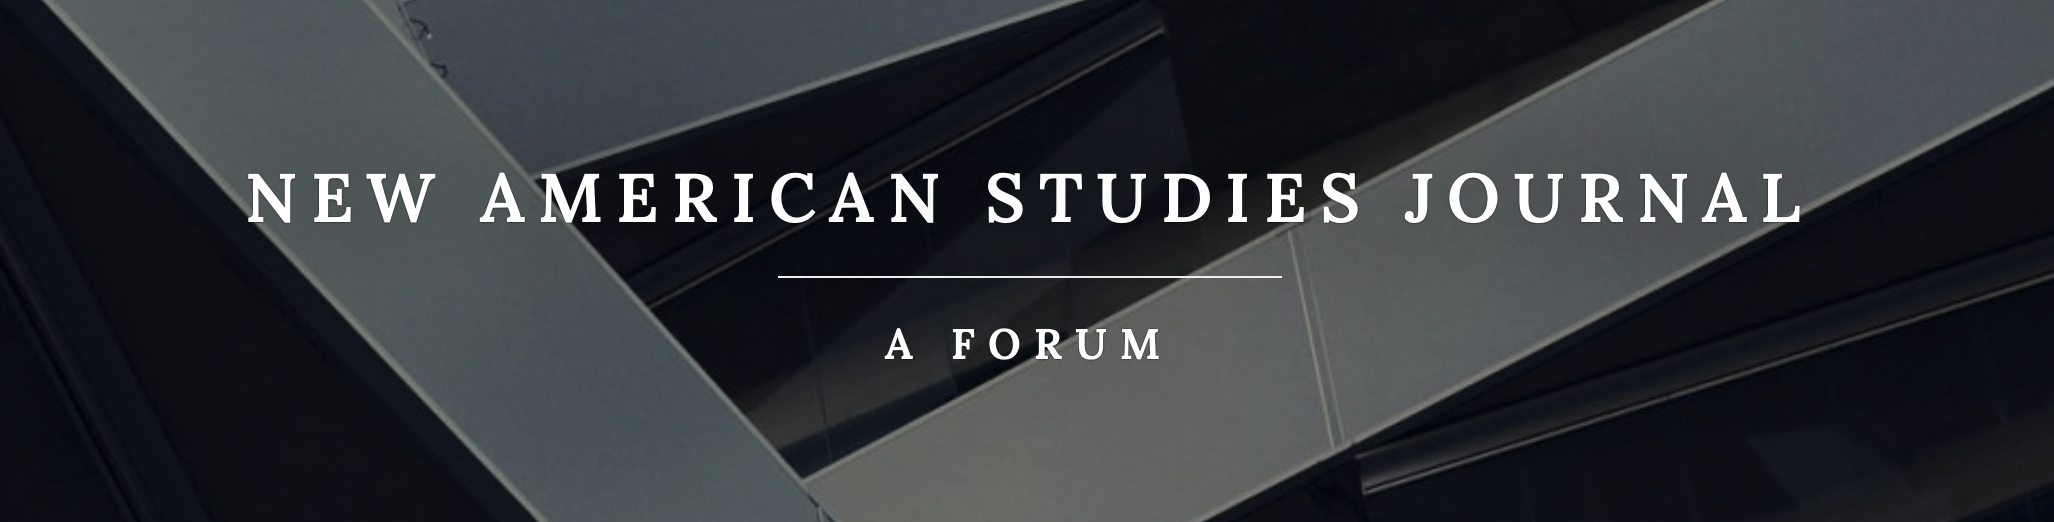 New American Studies Journal logo